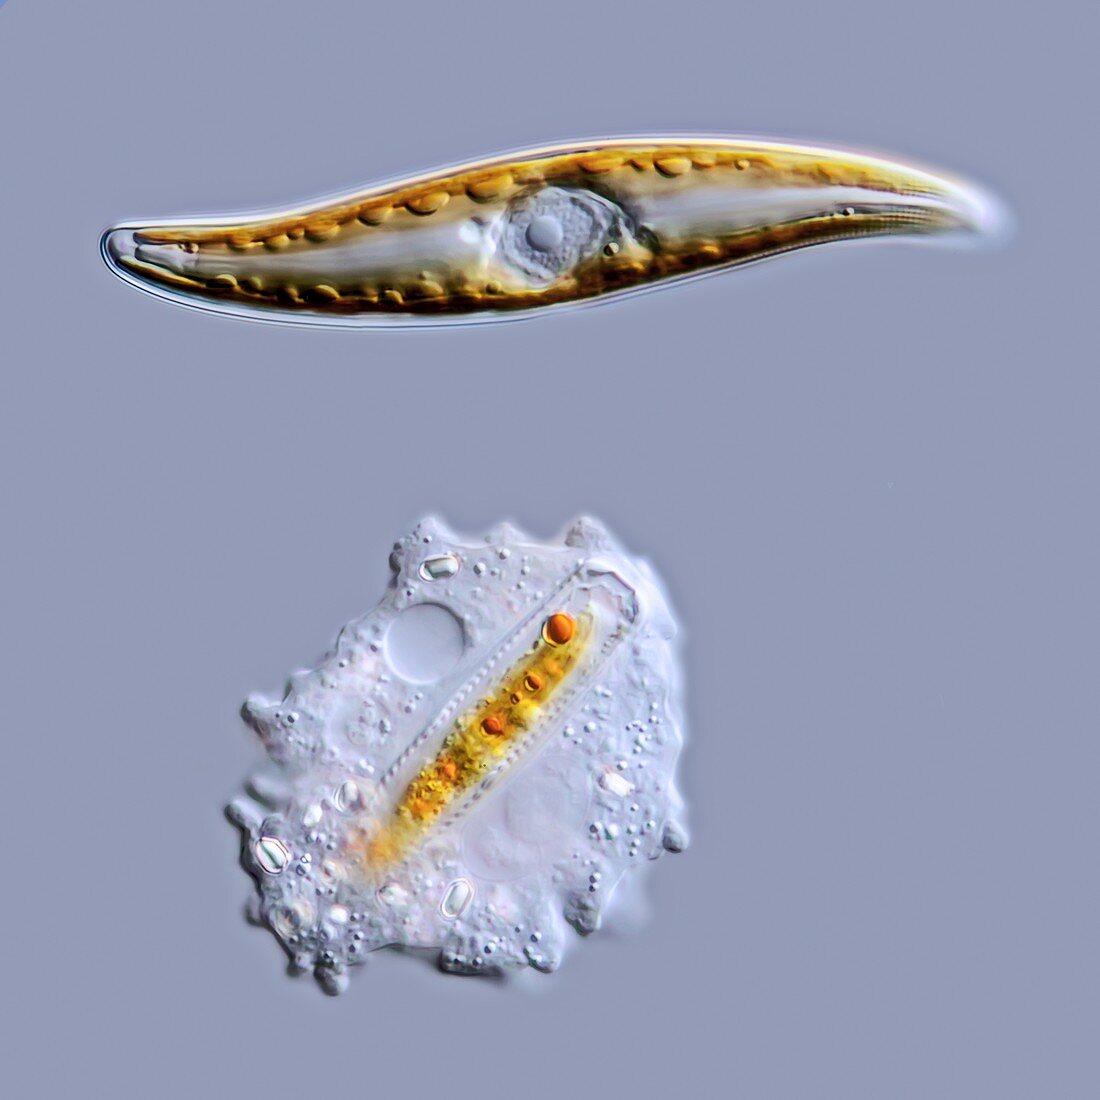 Gyrosigma diatom,Mayorella amoeba,LM